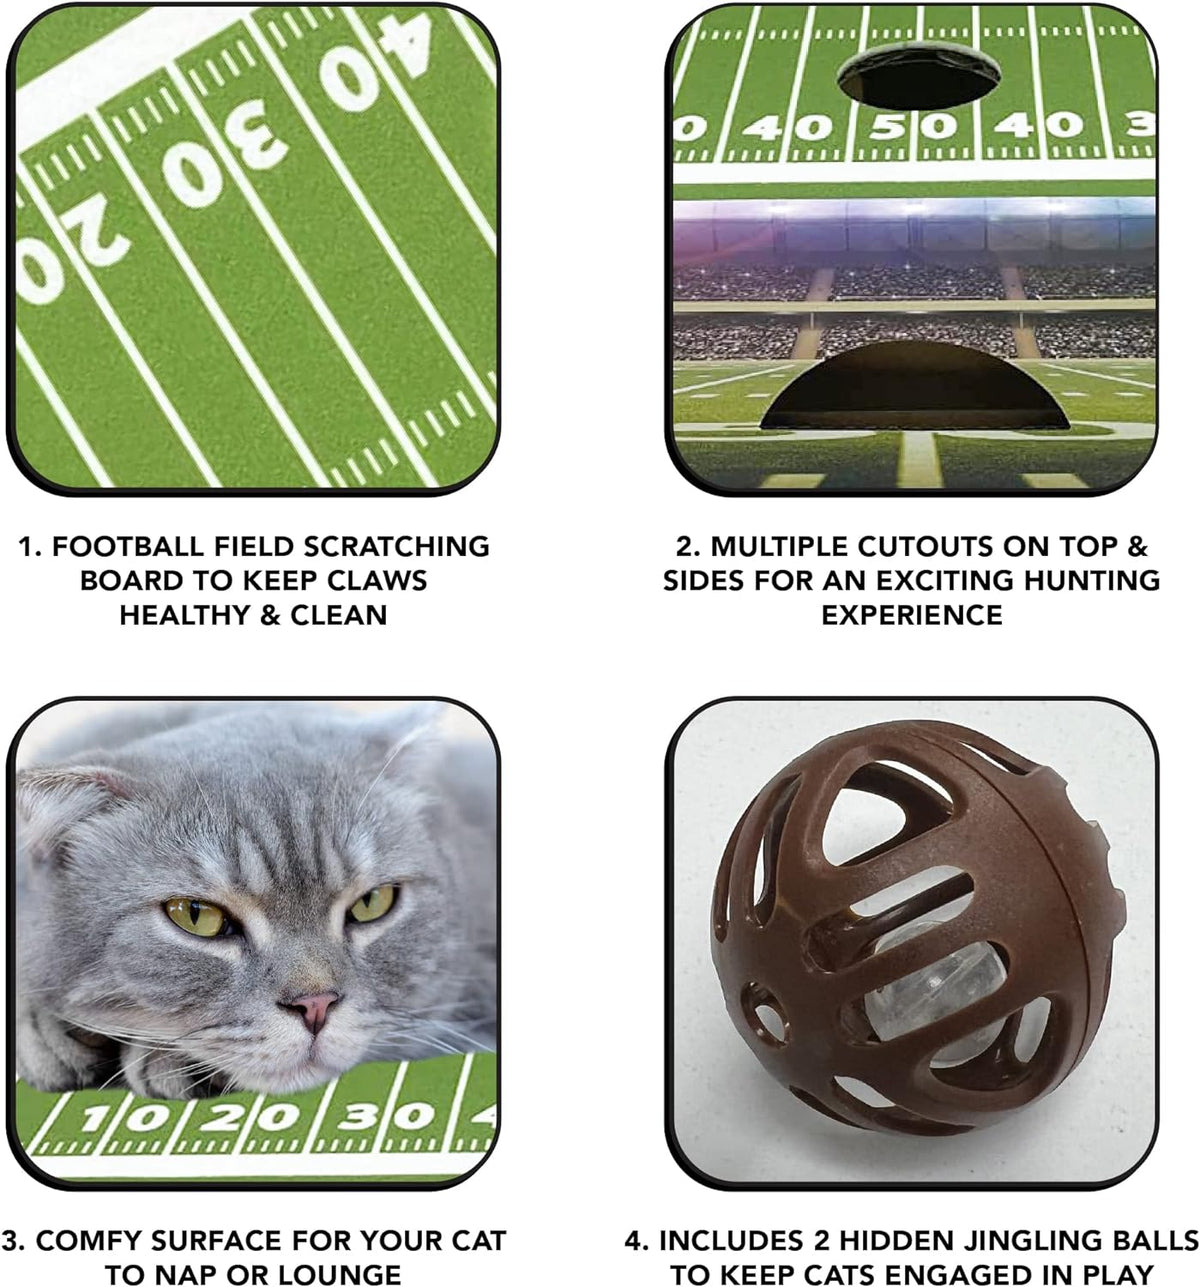 AR Razorbacks Football Stadium Cat Scratcher Toy